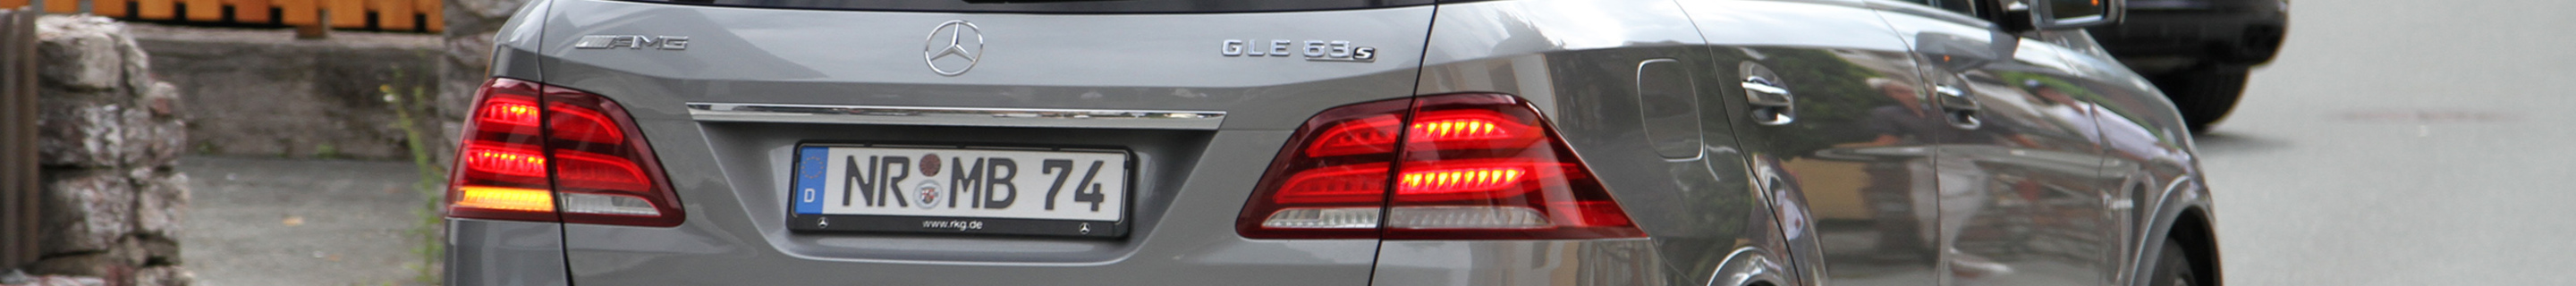 Mercedes-AMG GLE 63 S